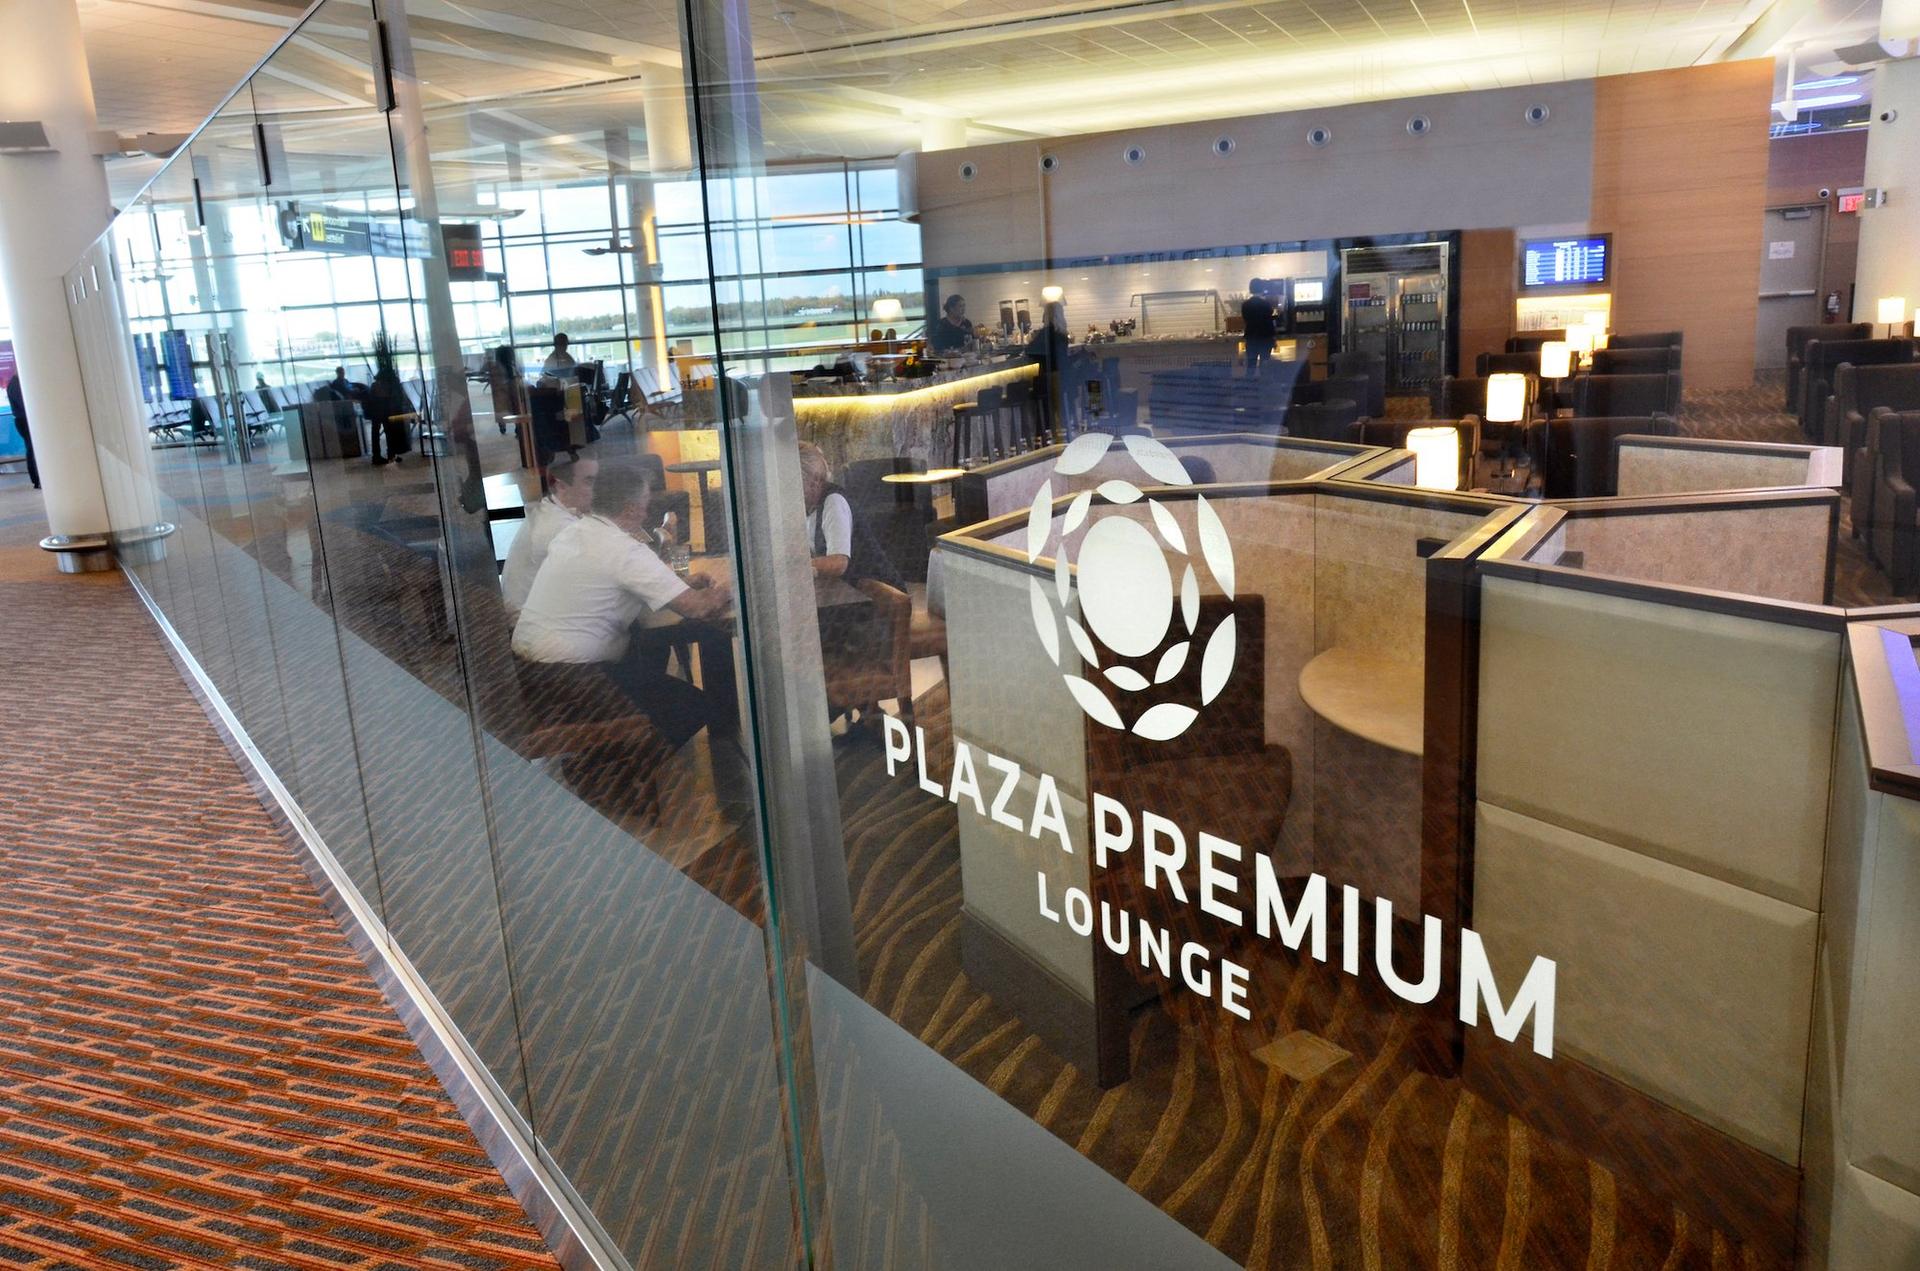 Plaza Premium Lounge image 45 of 45